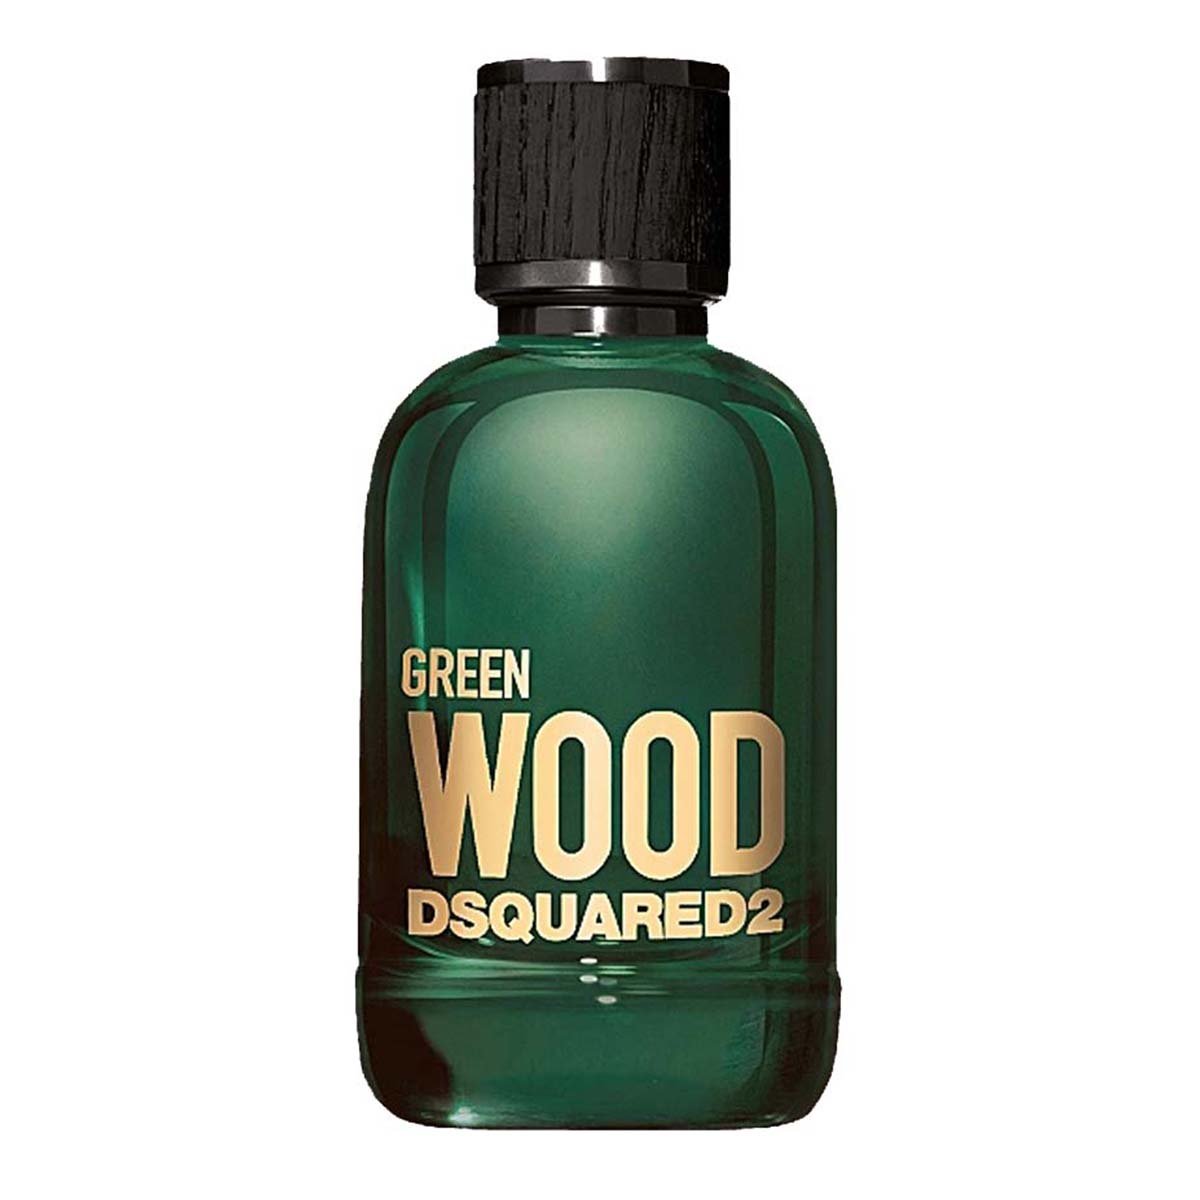 Dsquared 2 Green Wood Edt For Men 100 ml-Perfume - AllurebeautypkDsquared 2 Green Wood Edt For Men 100 ml-Perfume